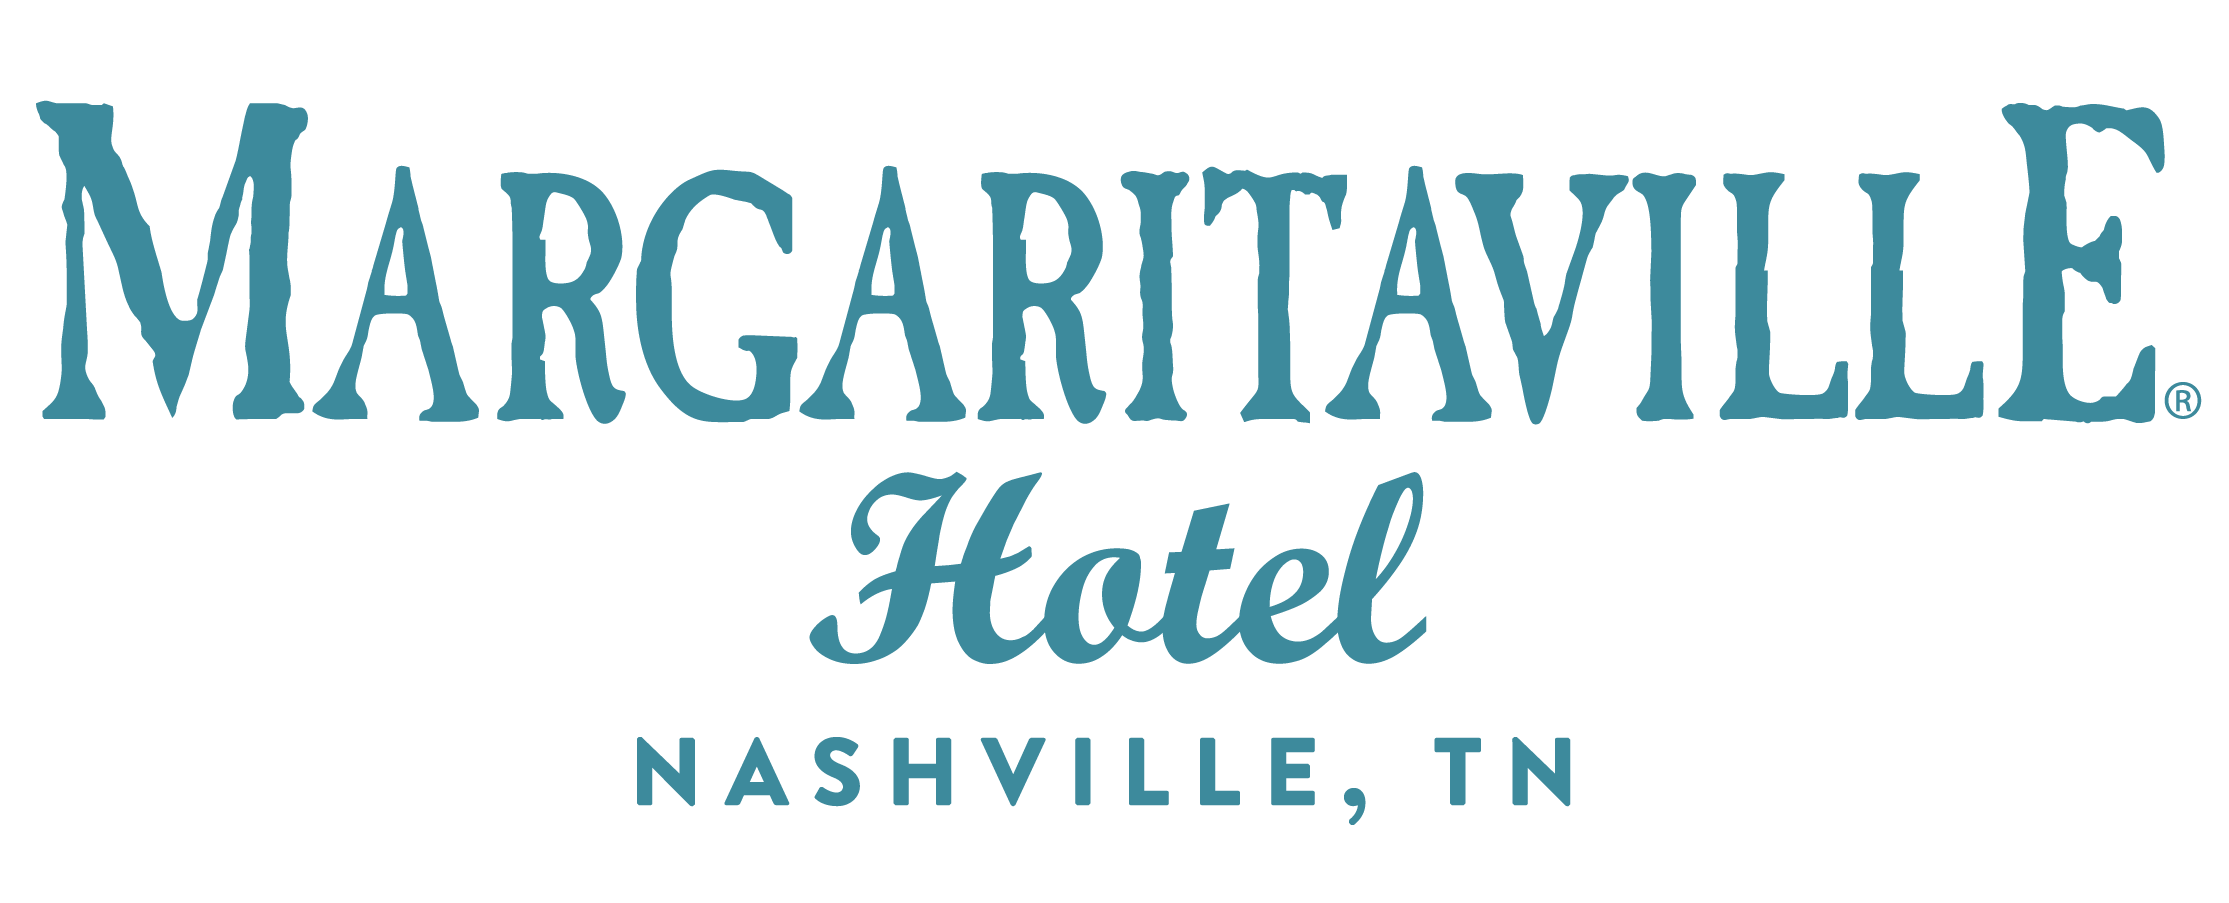 Margaritaville Hotel Nashville